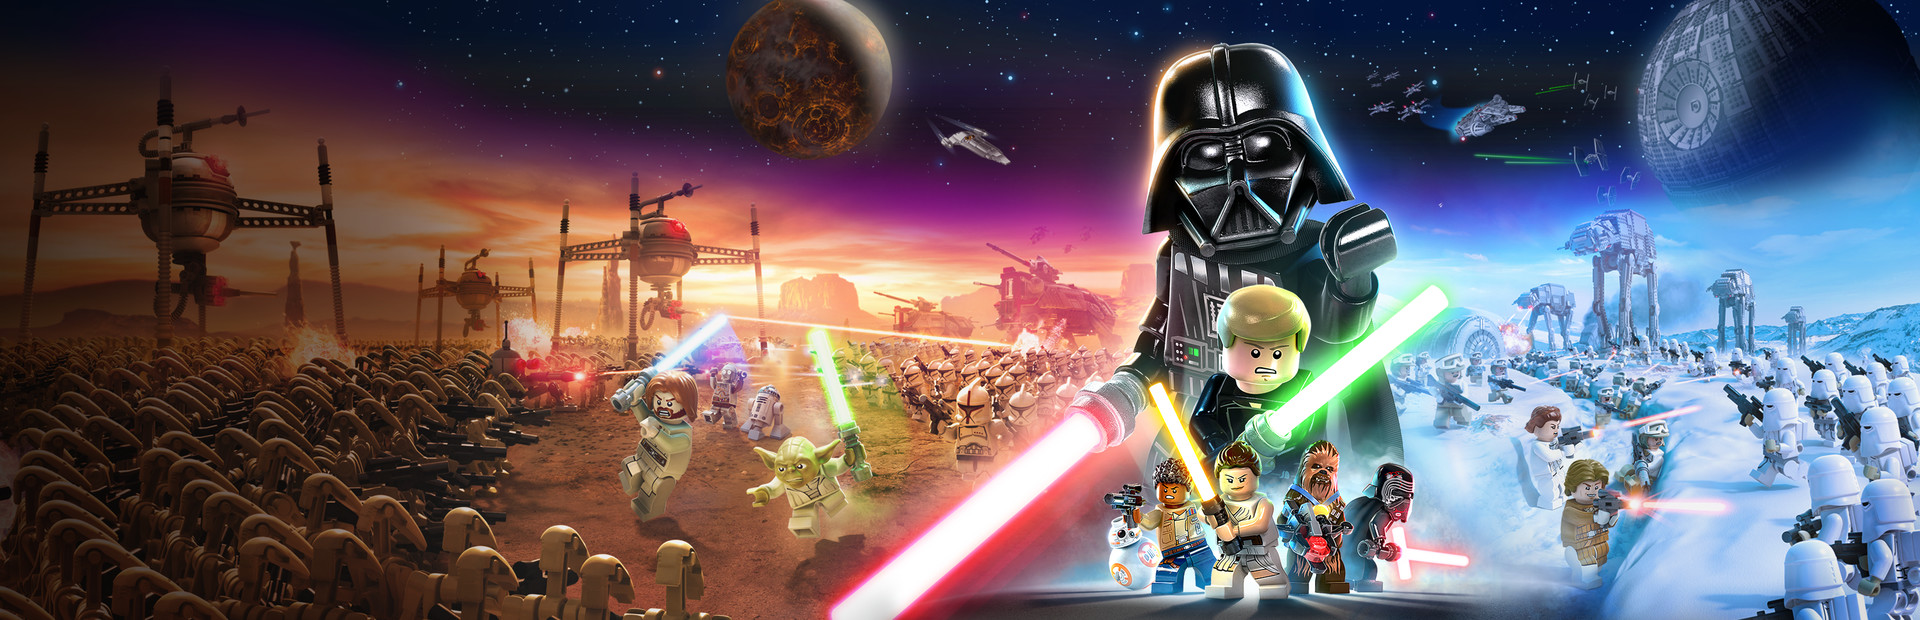 LEGO Star Wars The Skywalker Saga 1 0 9 MULTi15 GNU Linux Wine jc141